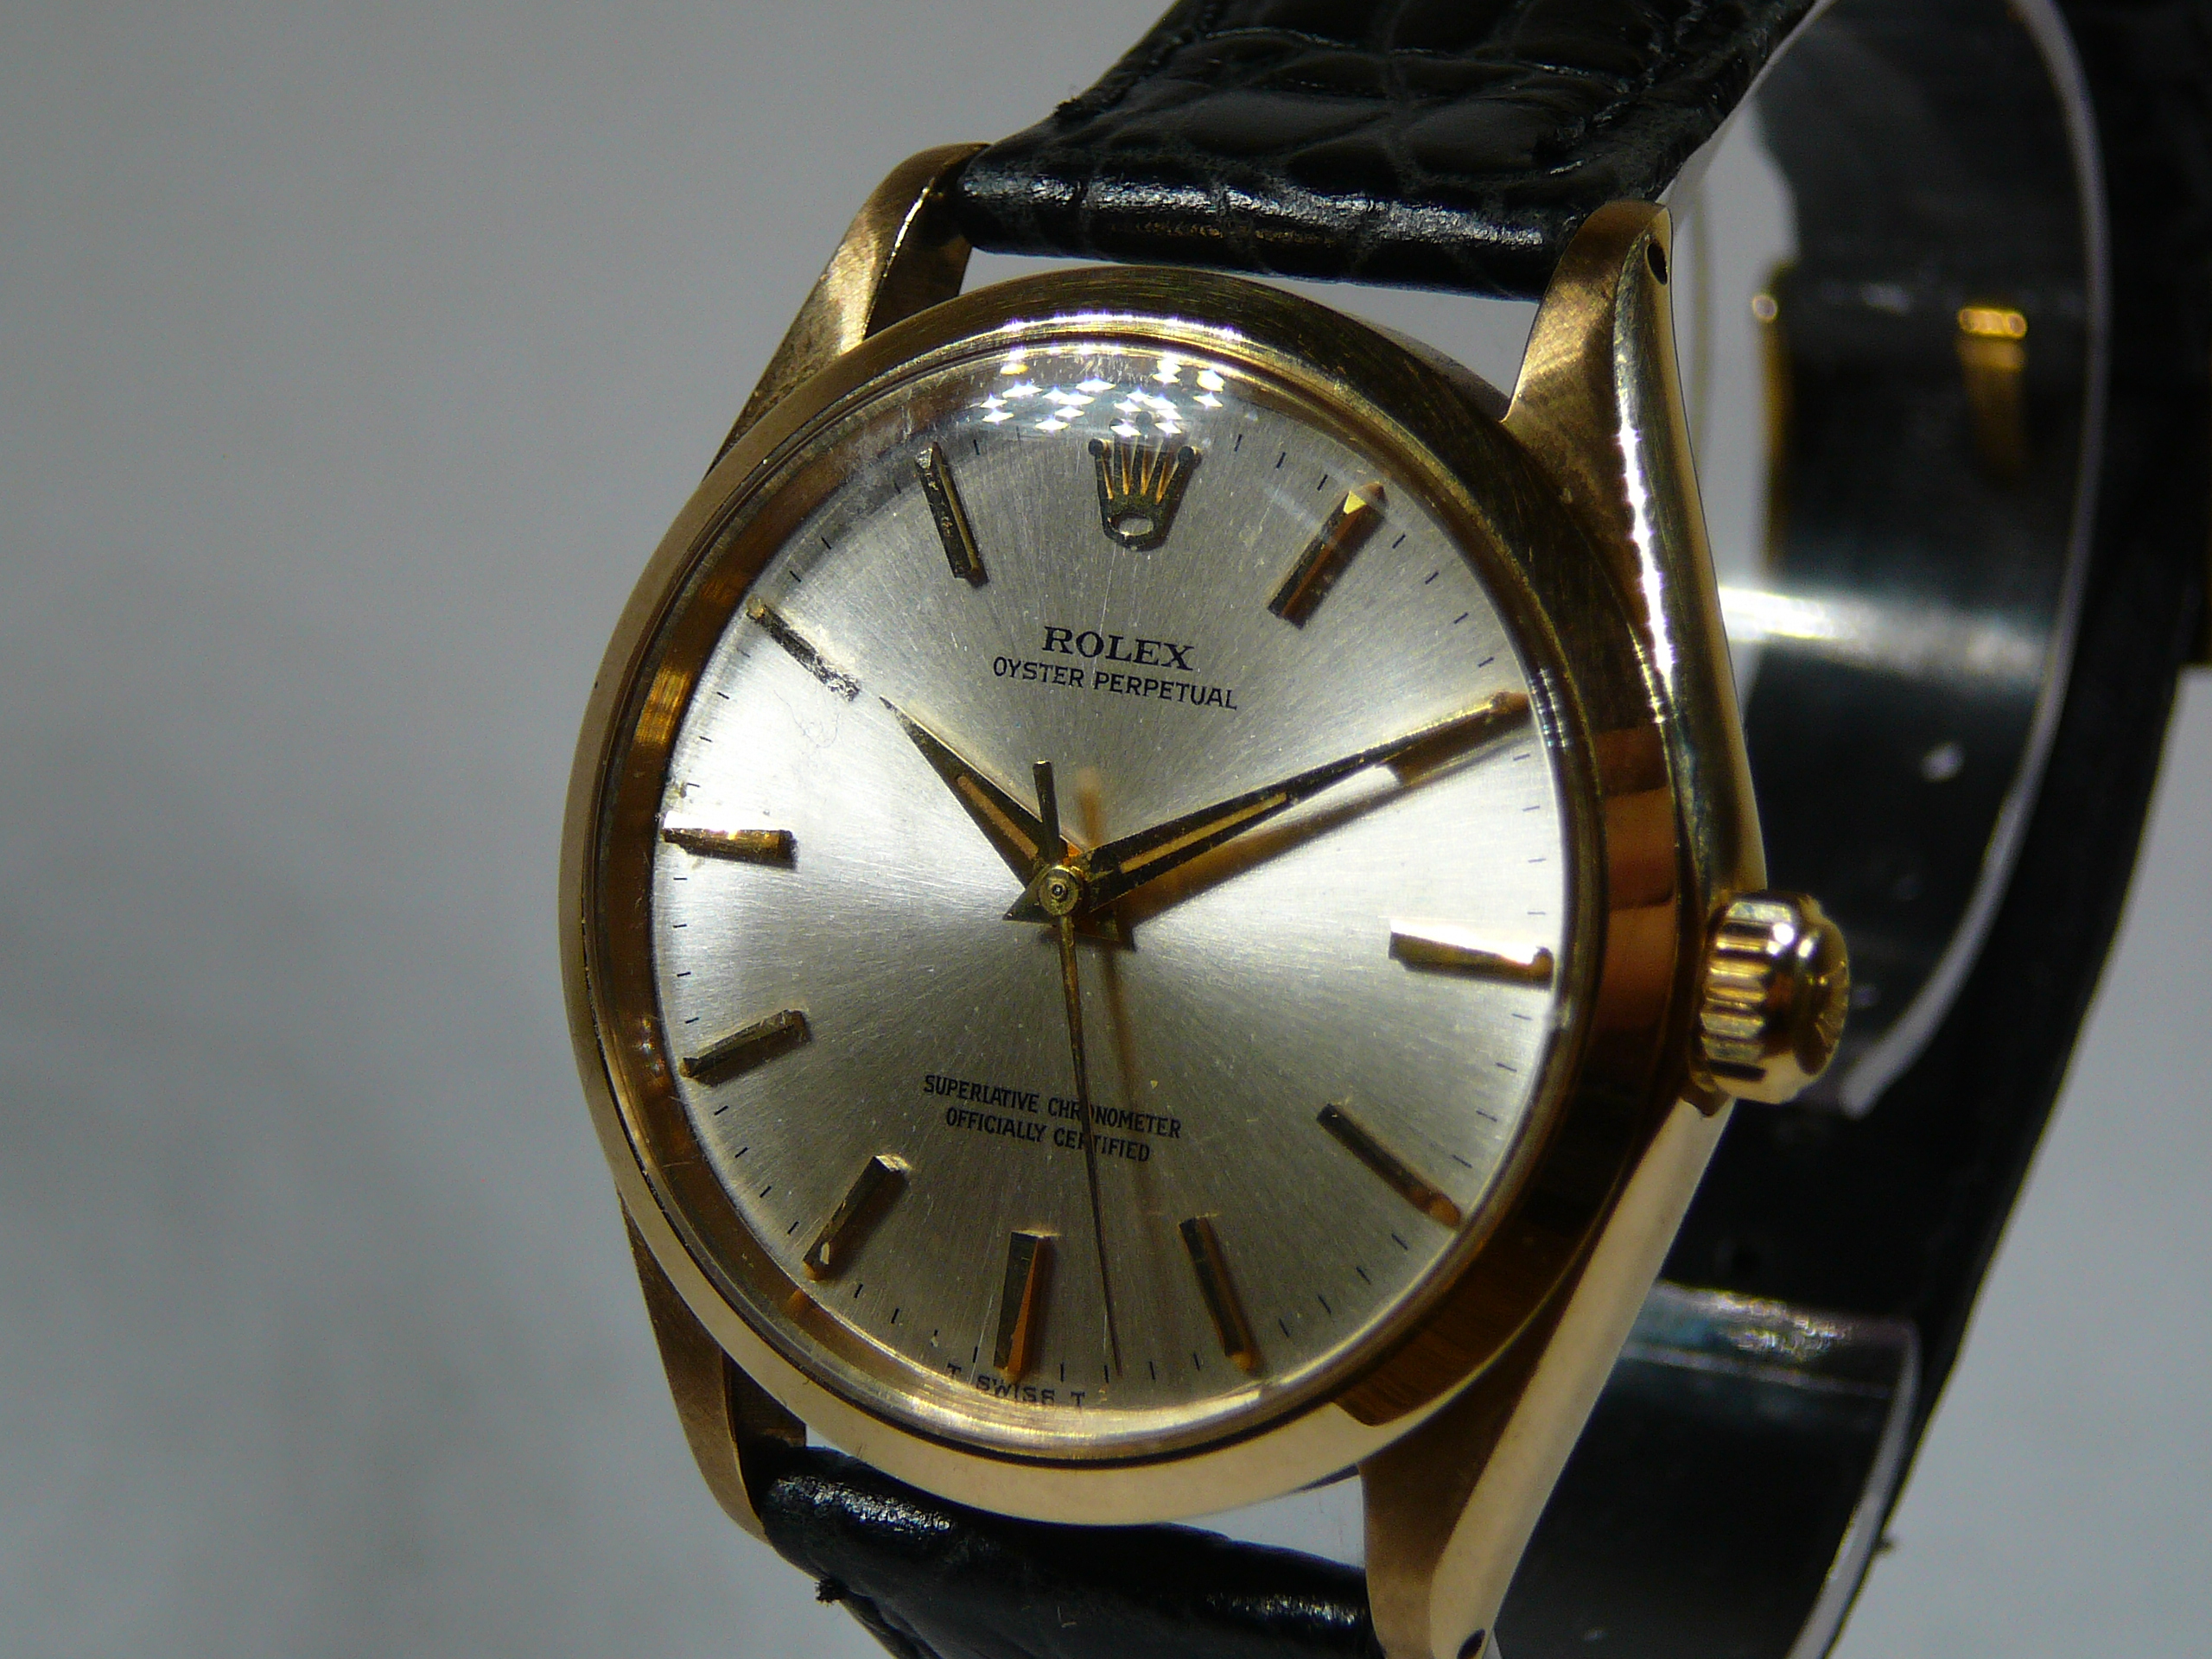 Gents Rolex Gold Wrist Watch - Image 2 of 4